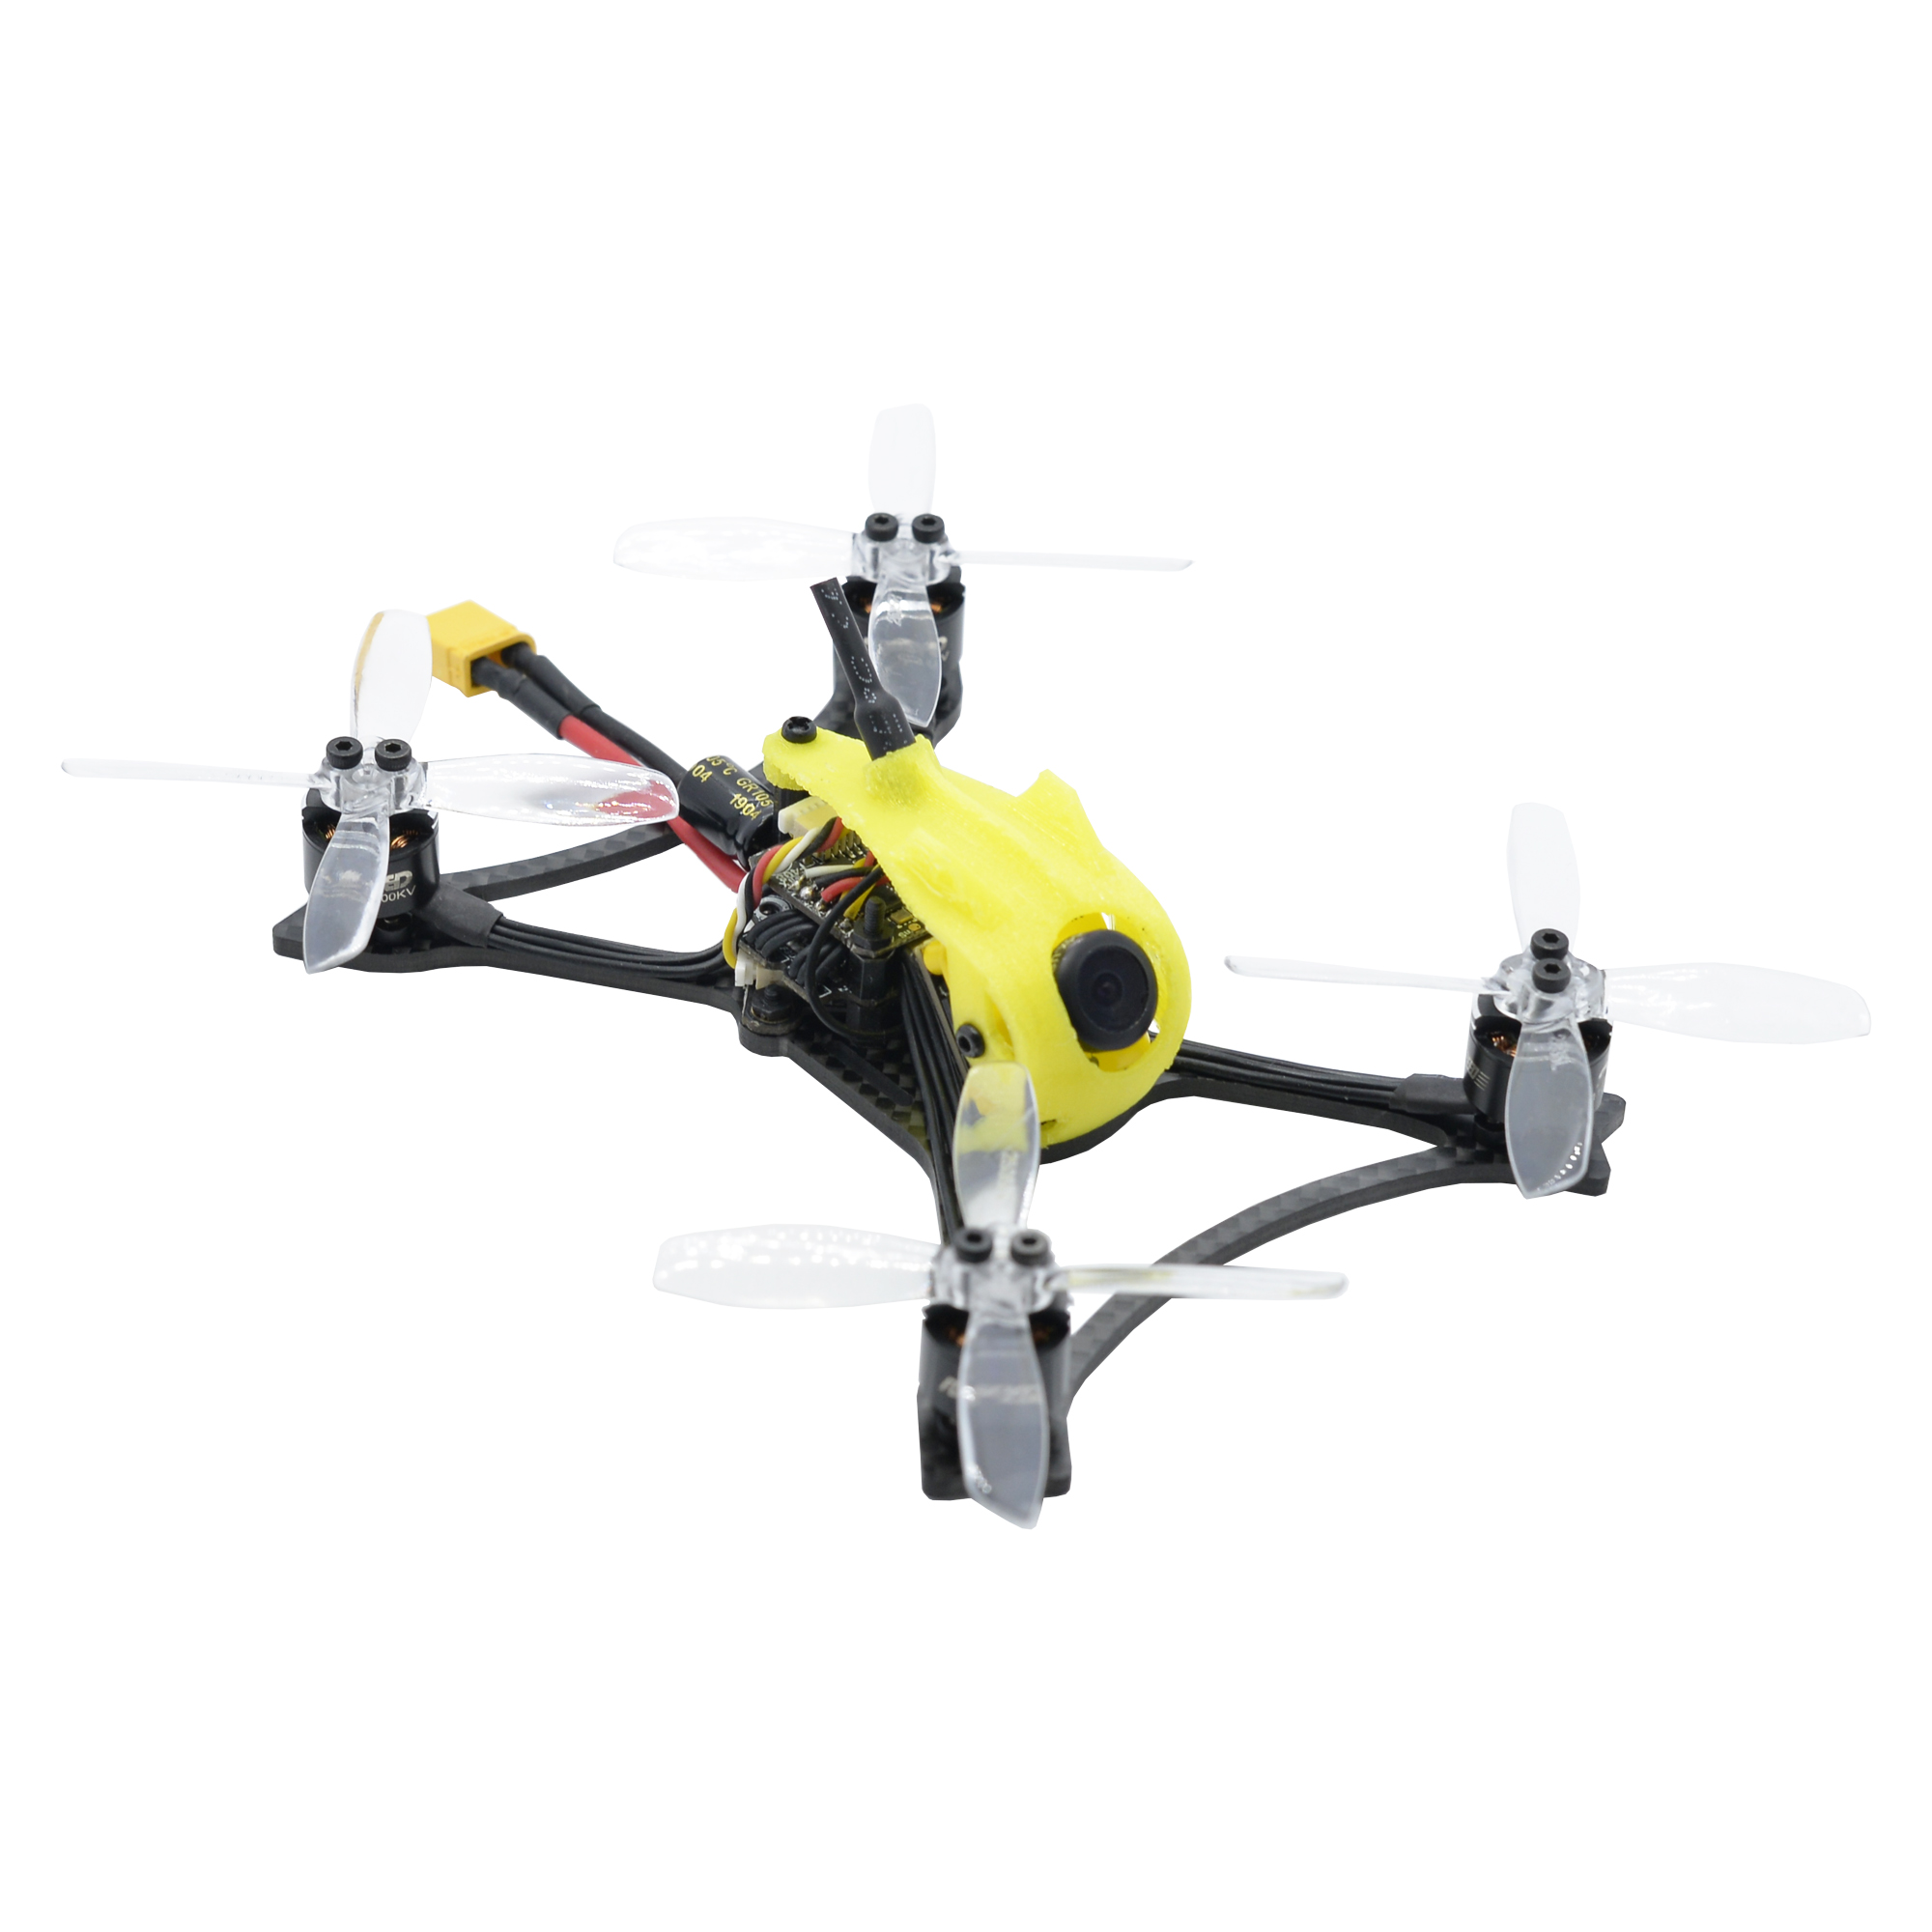 Fullspeed Toothpick PRO FPV Drone 2-4S S-FHSS受信機付